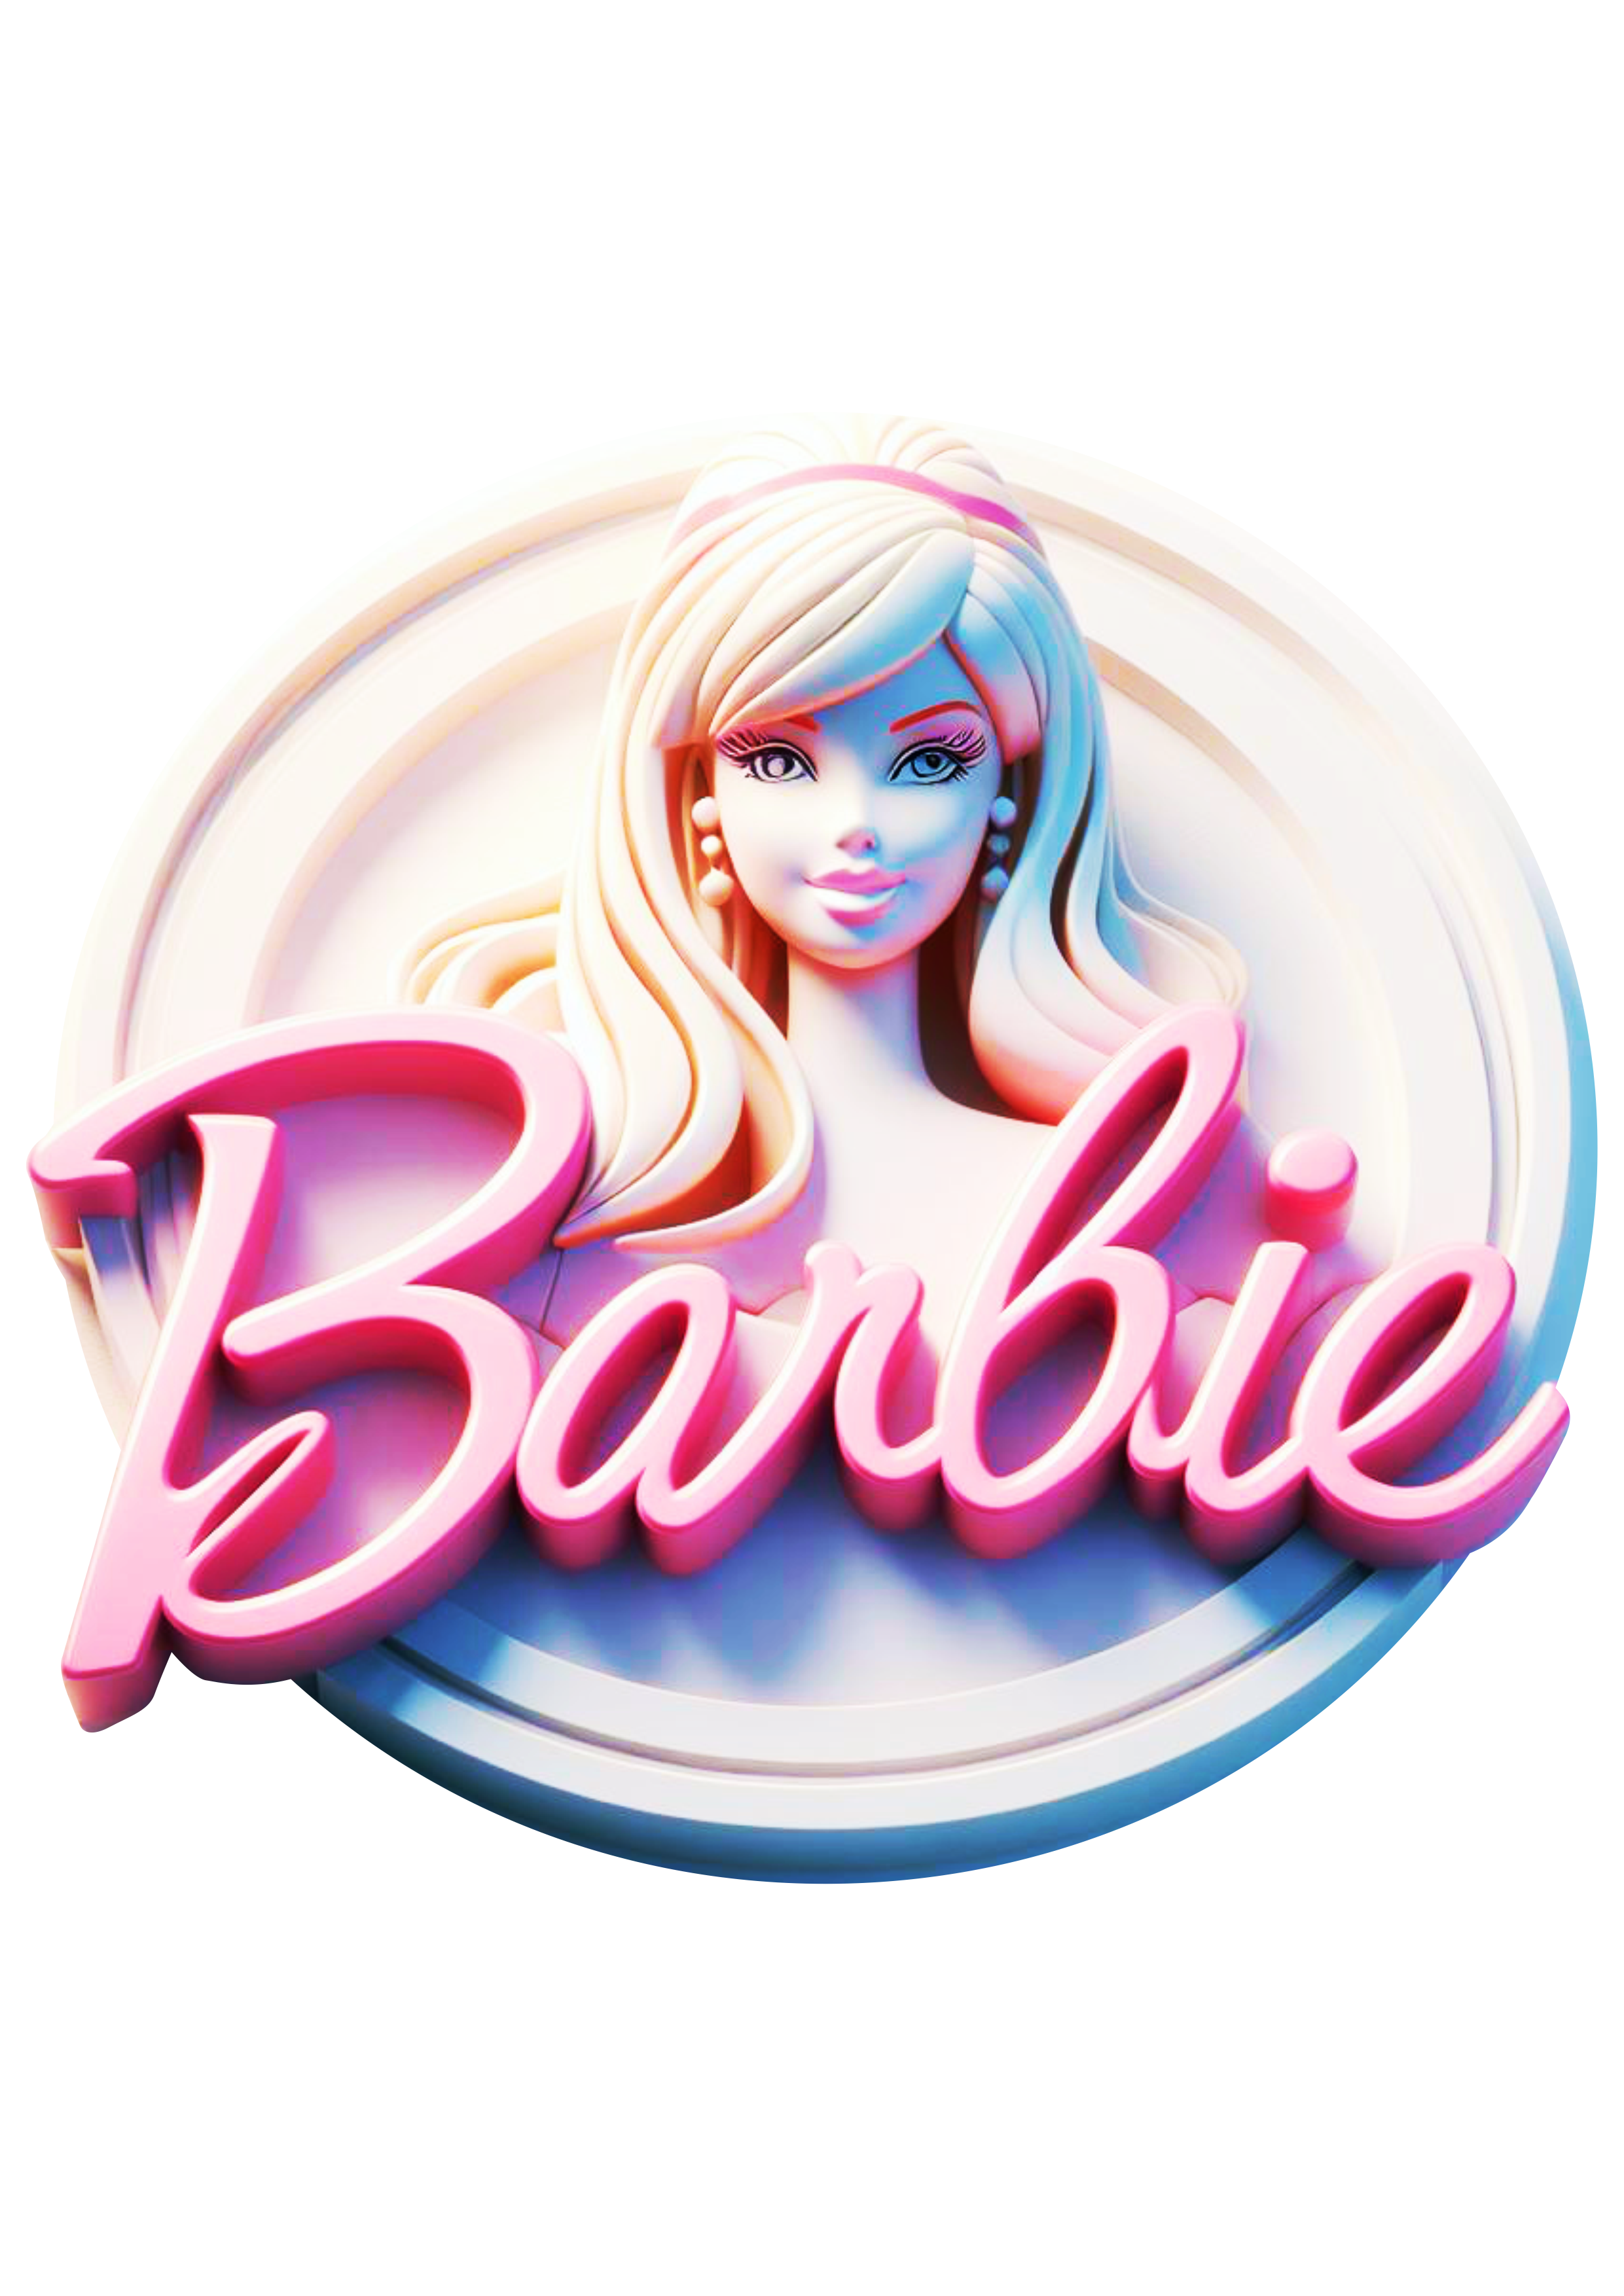 Barbie Boneca logomarca png image